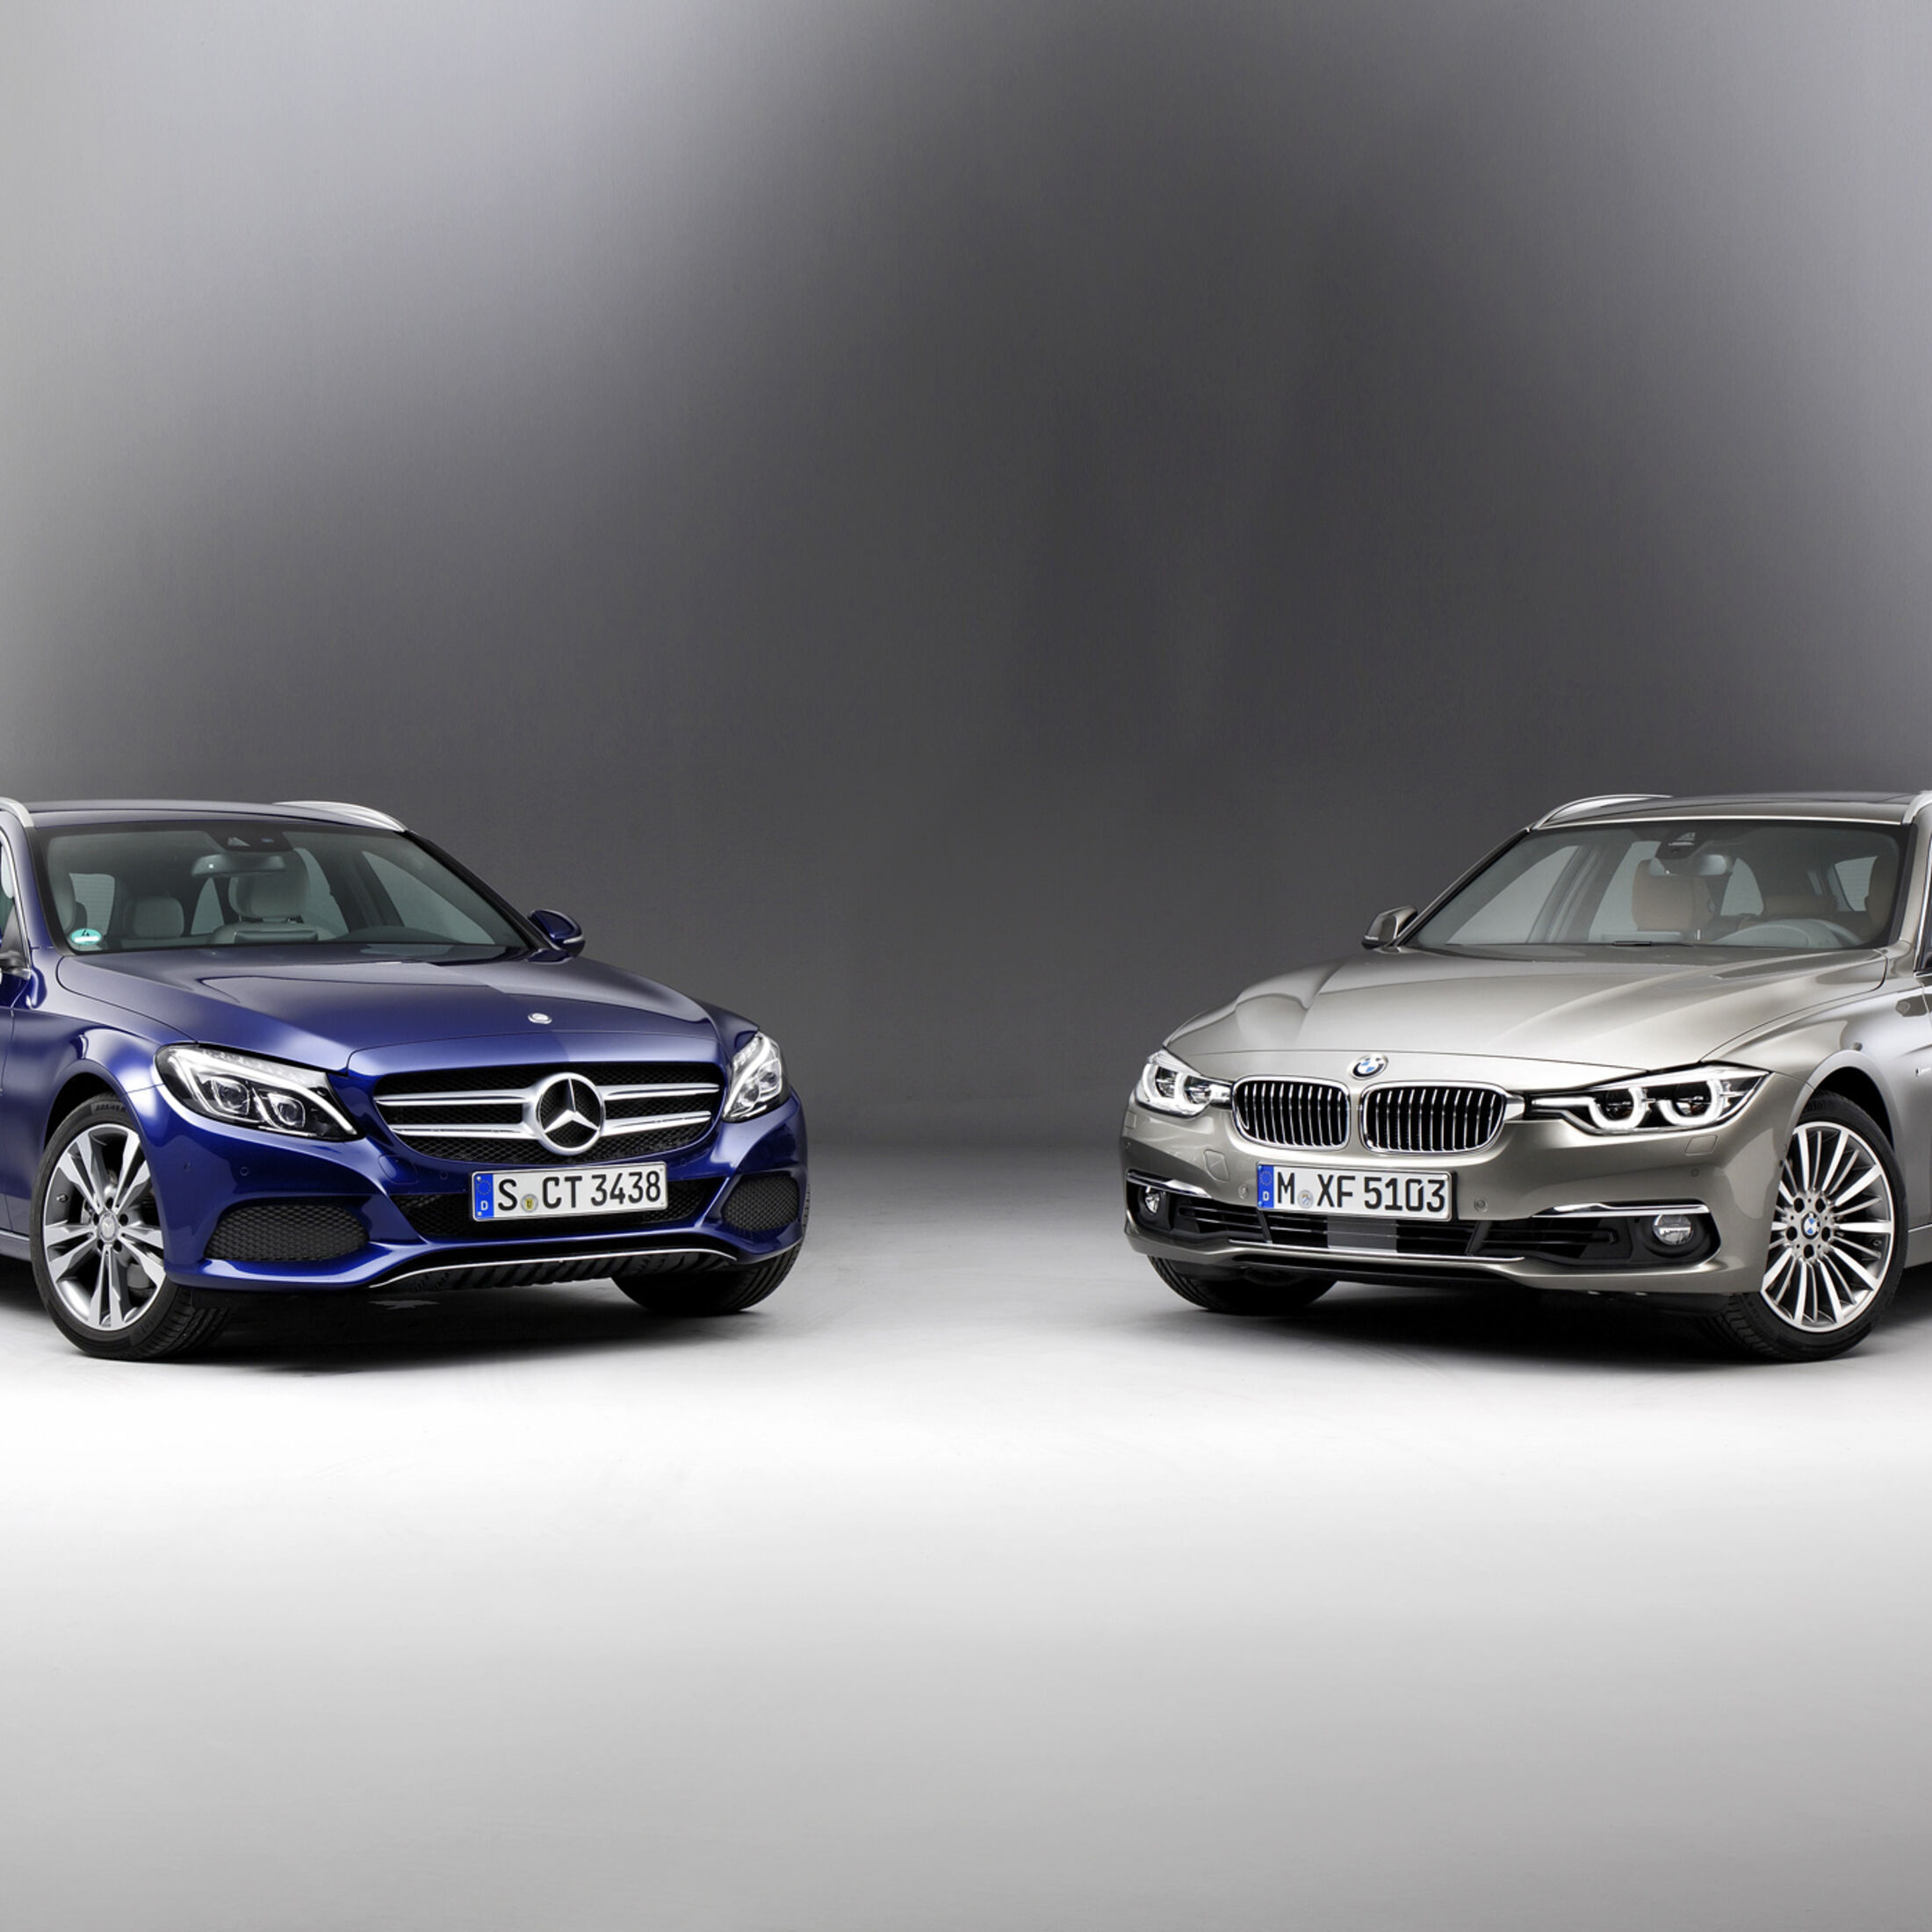 BMW 3er Touring vs. Mercedes C-Klasse T-Modell: Vergleich